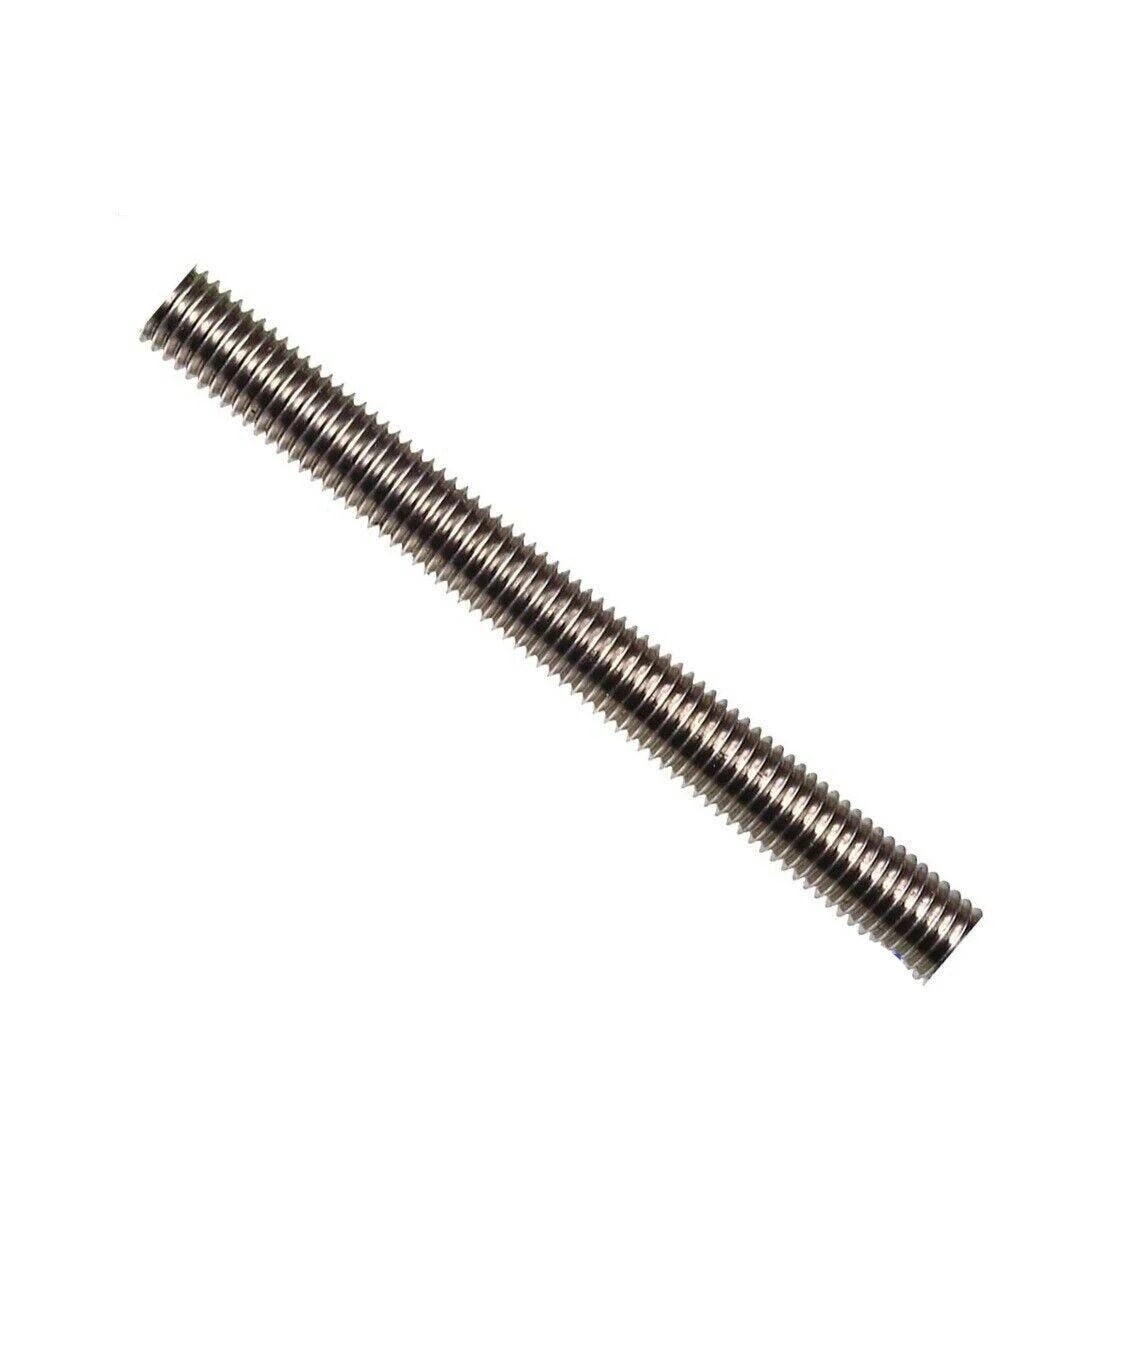 2 Sticks) 1 1/4"-7 x 36" Stainless Steel Threaded Rod 316 Stainless All-Thread